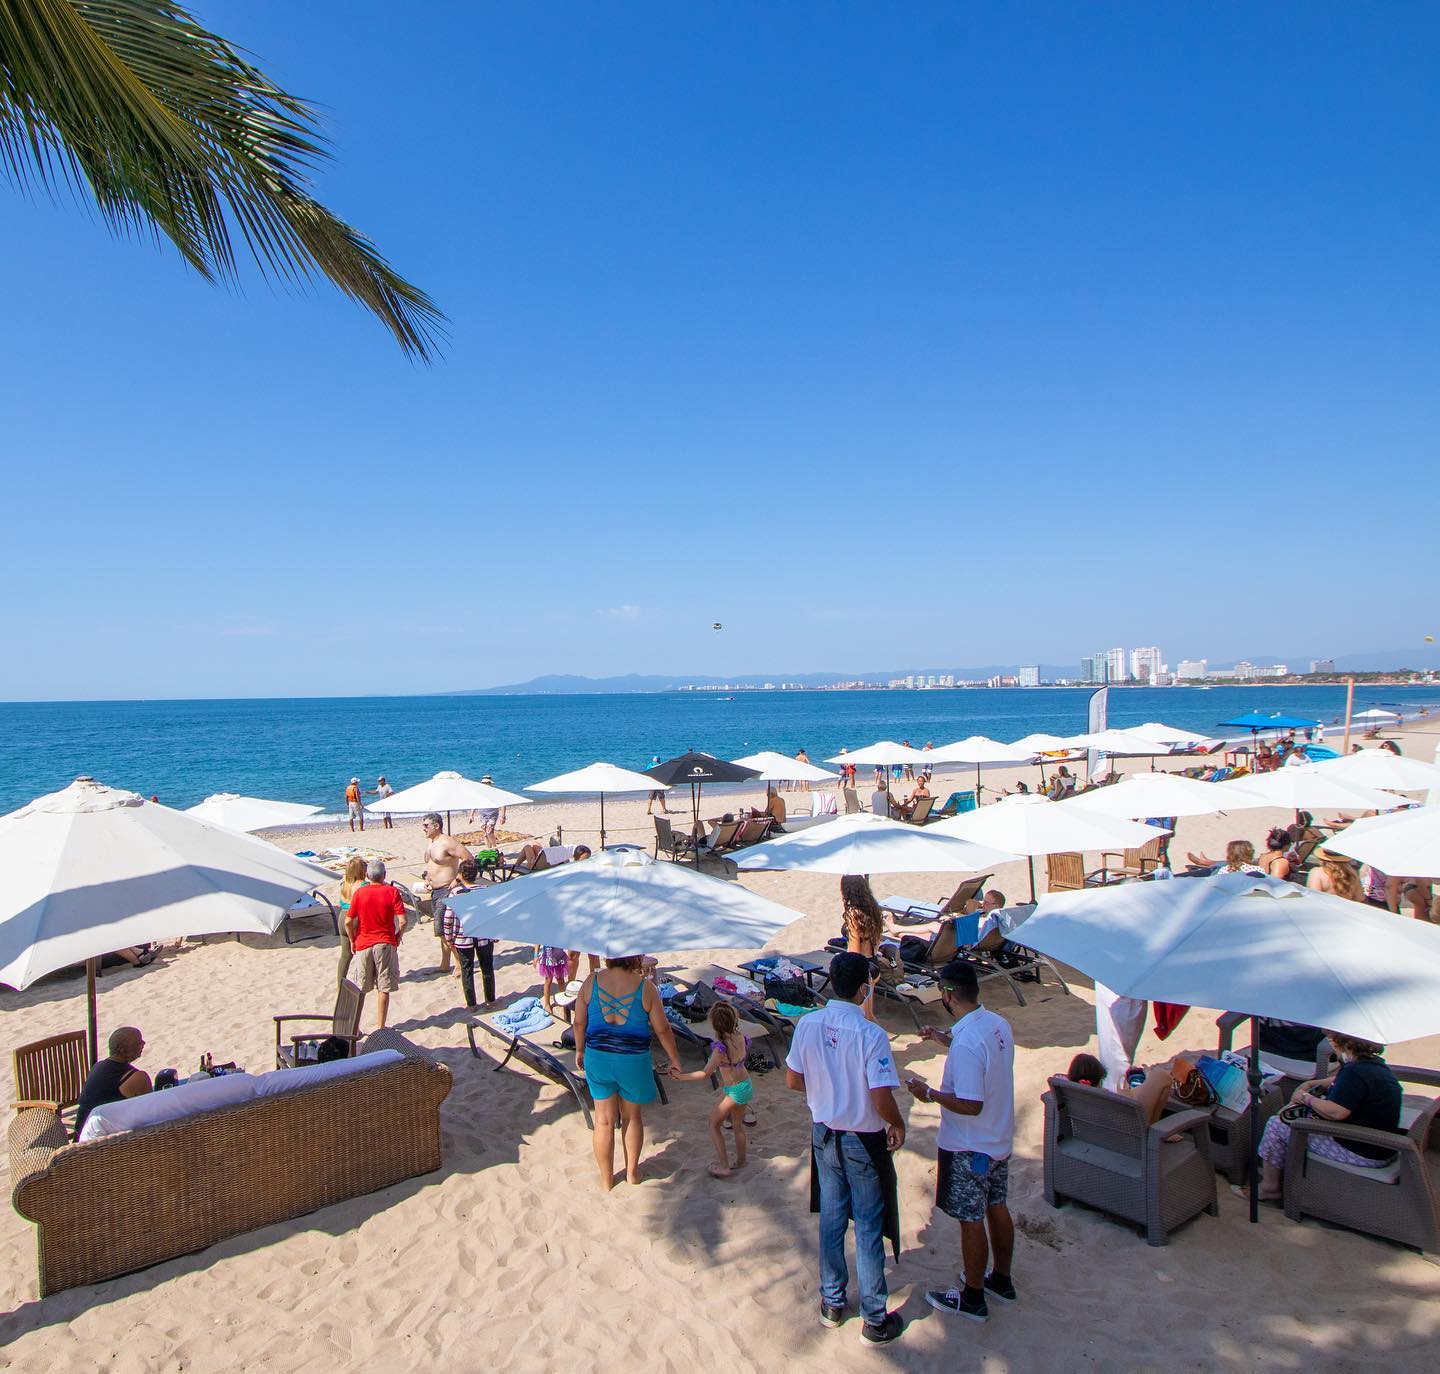 5 Best Beach Clubs & Day Passes in Puerto Vallarta / Riviera Nayarit